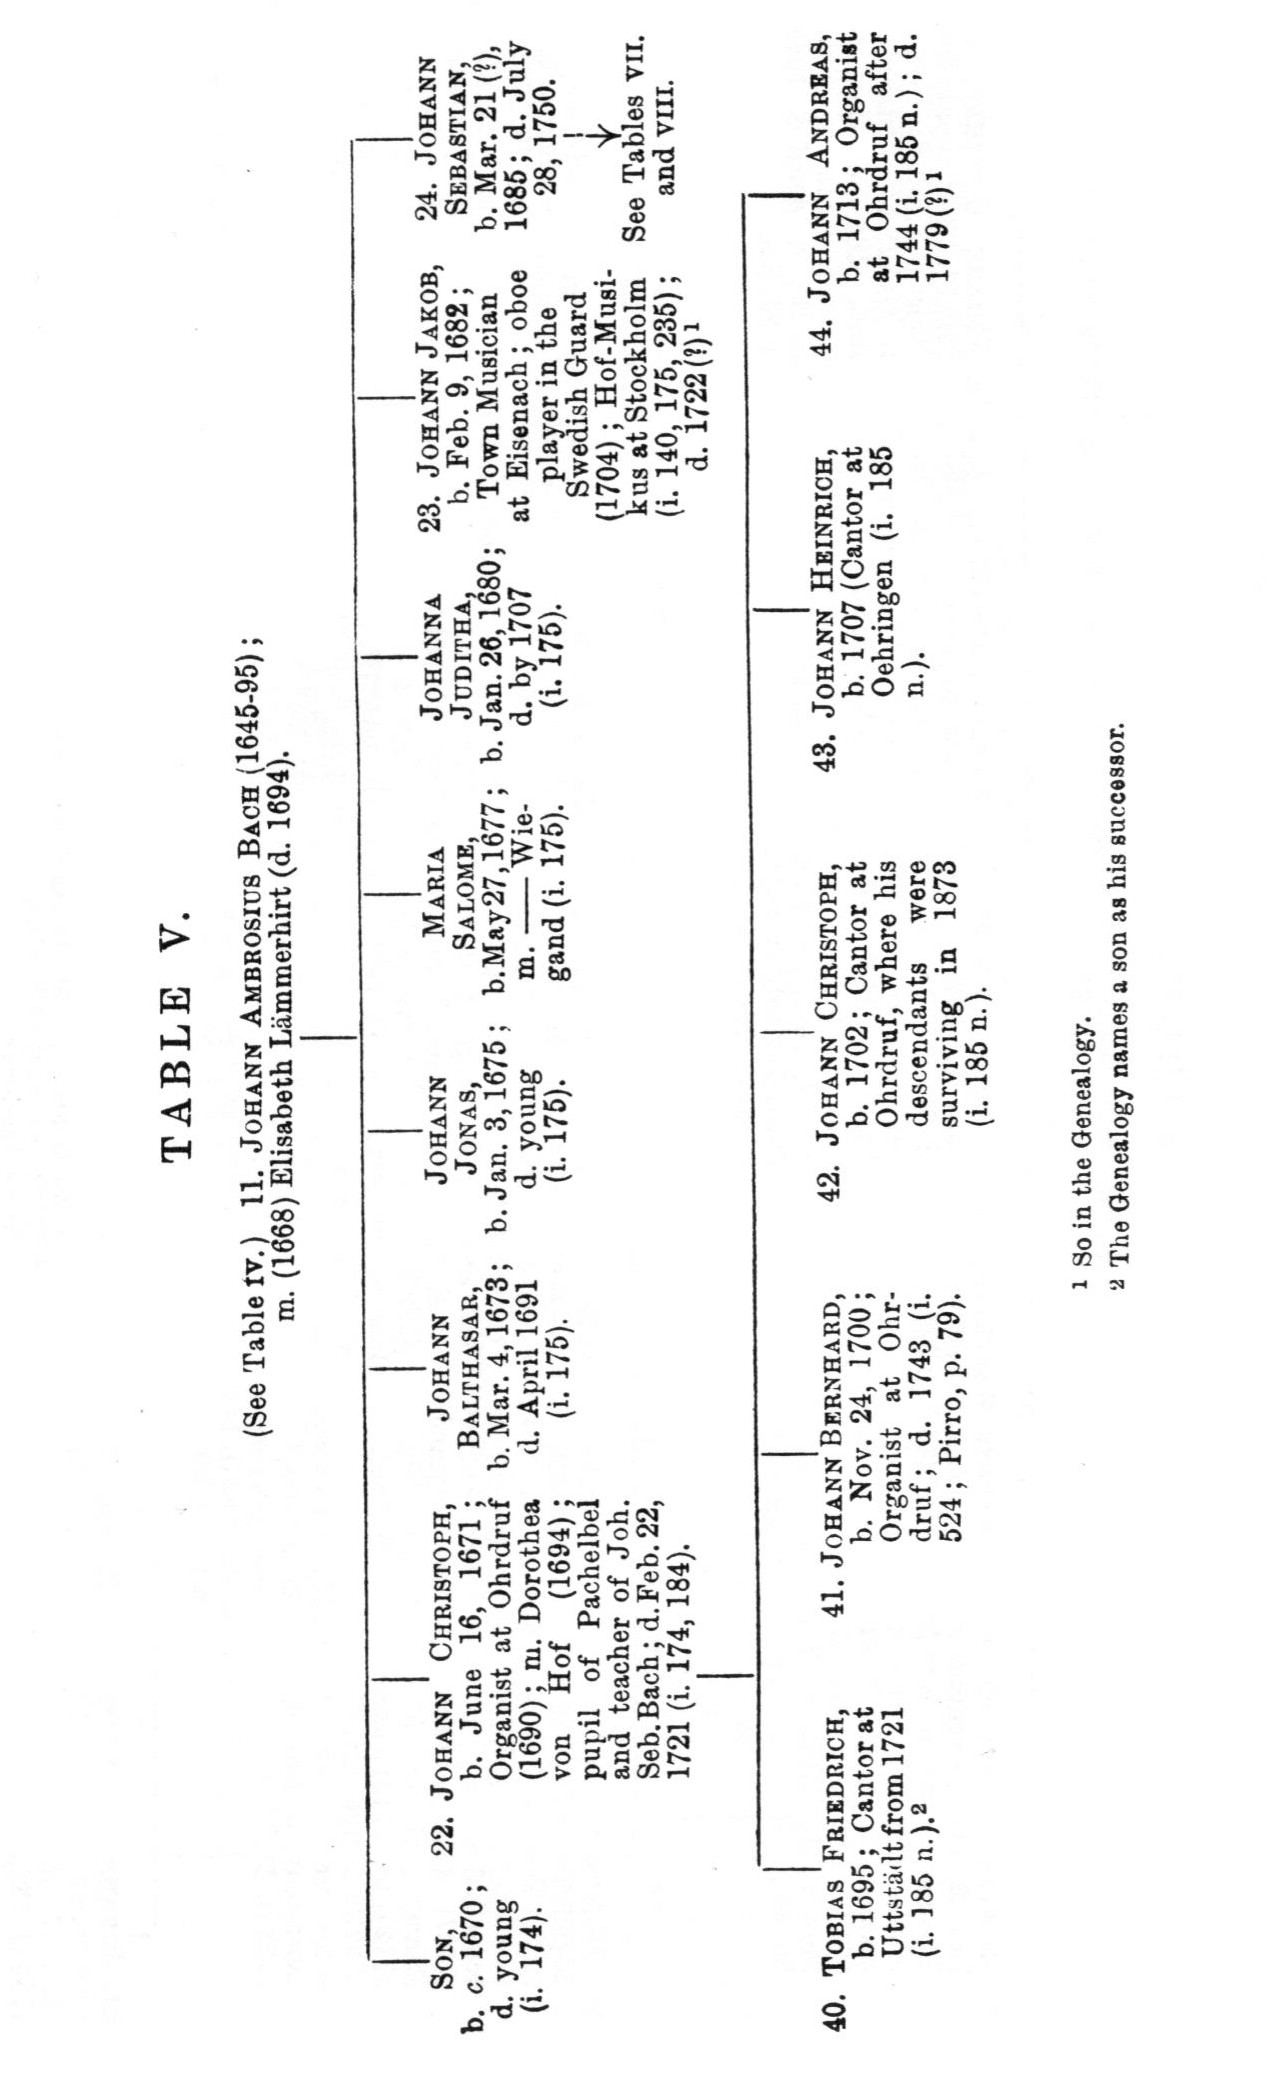 Genealogy Table, p. 307